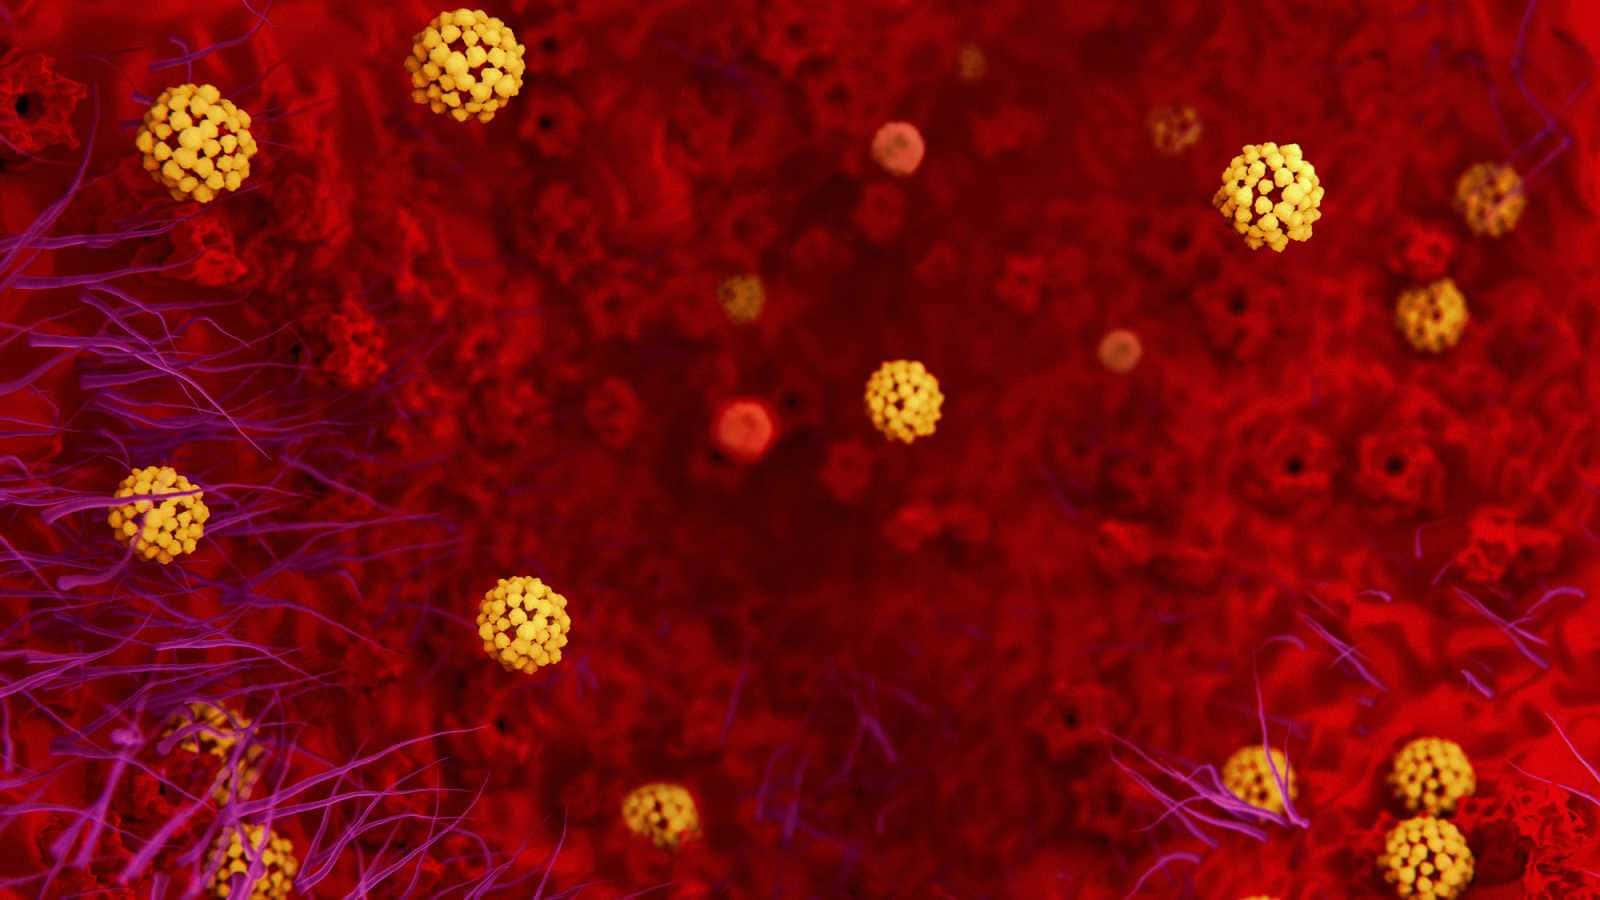 A microscopic view of the Coronavirus